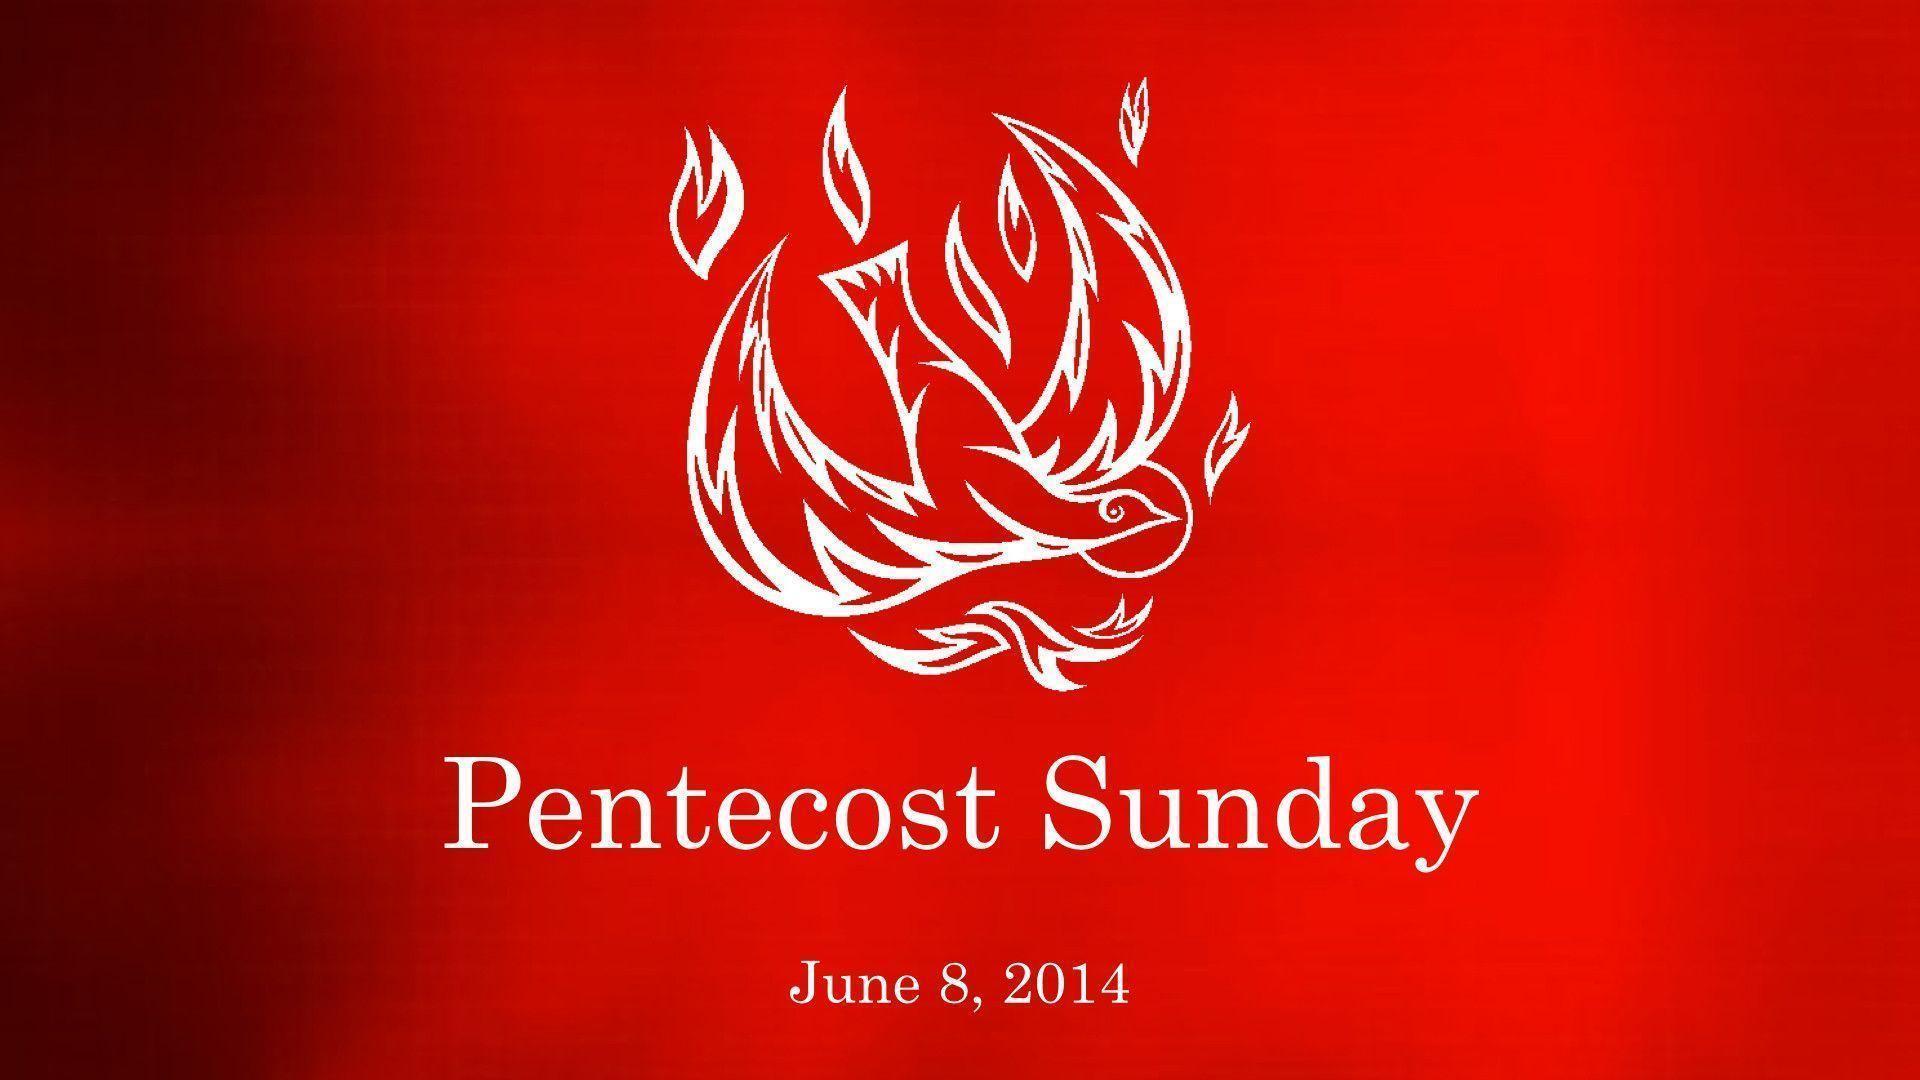 Pentecost 2015 Wallpaper